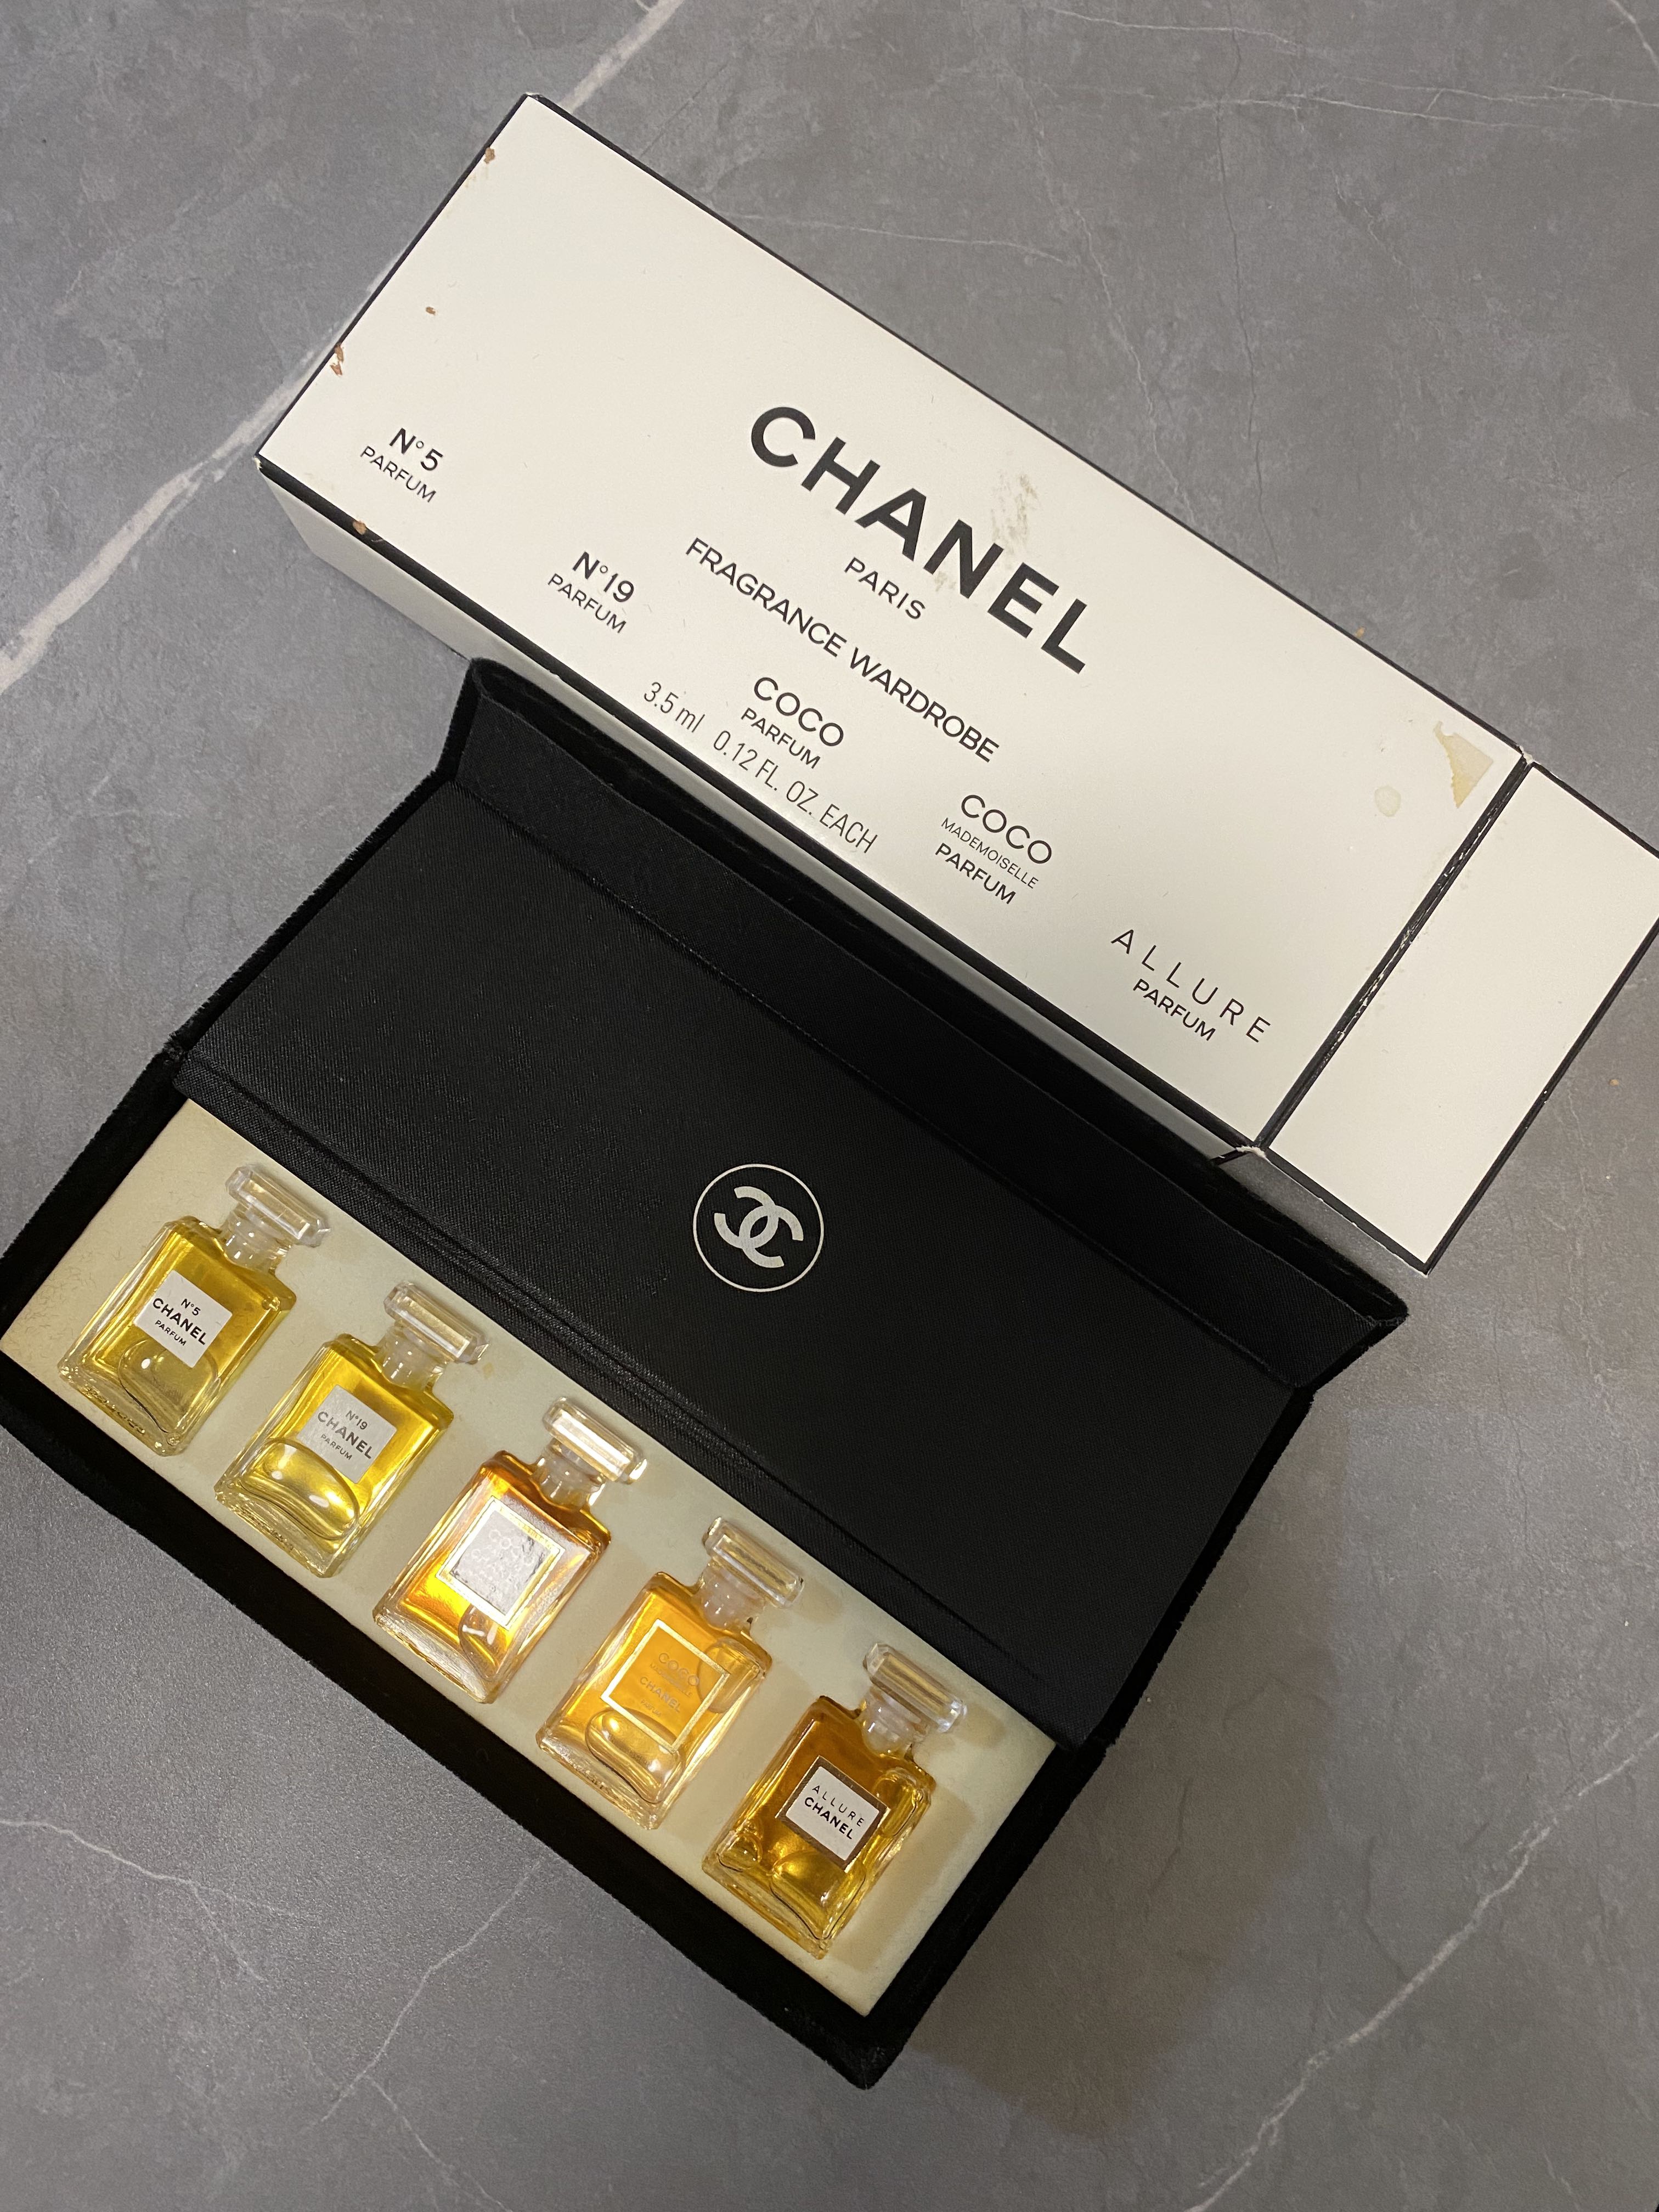 chanel fragrance wardrobe 5 piece set, 美容＆化妝品, 健康及美容